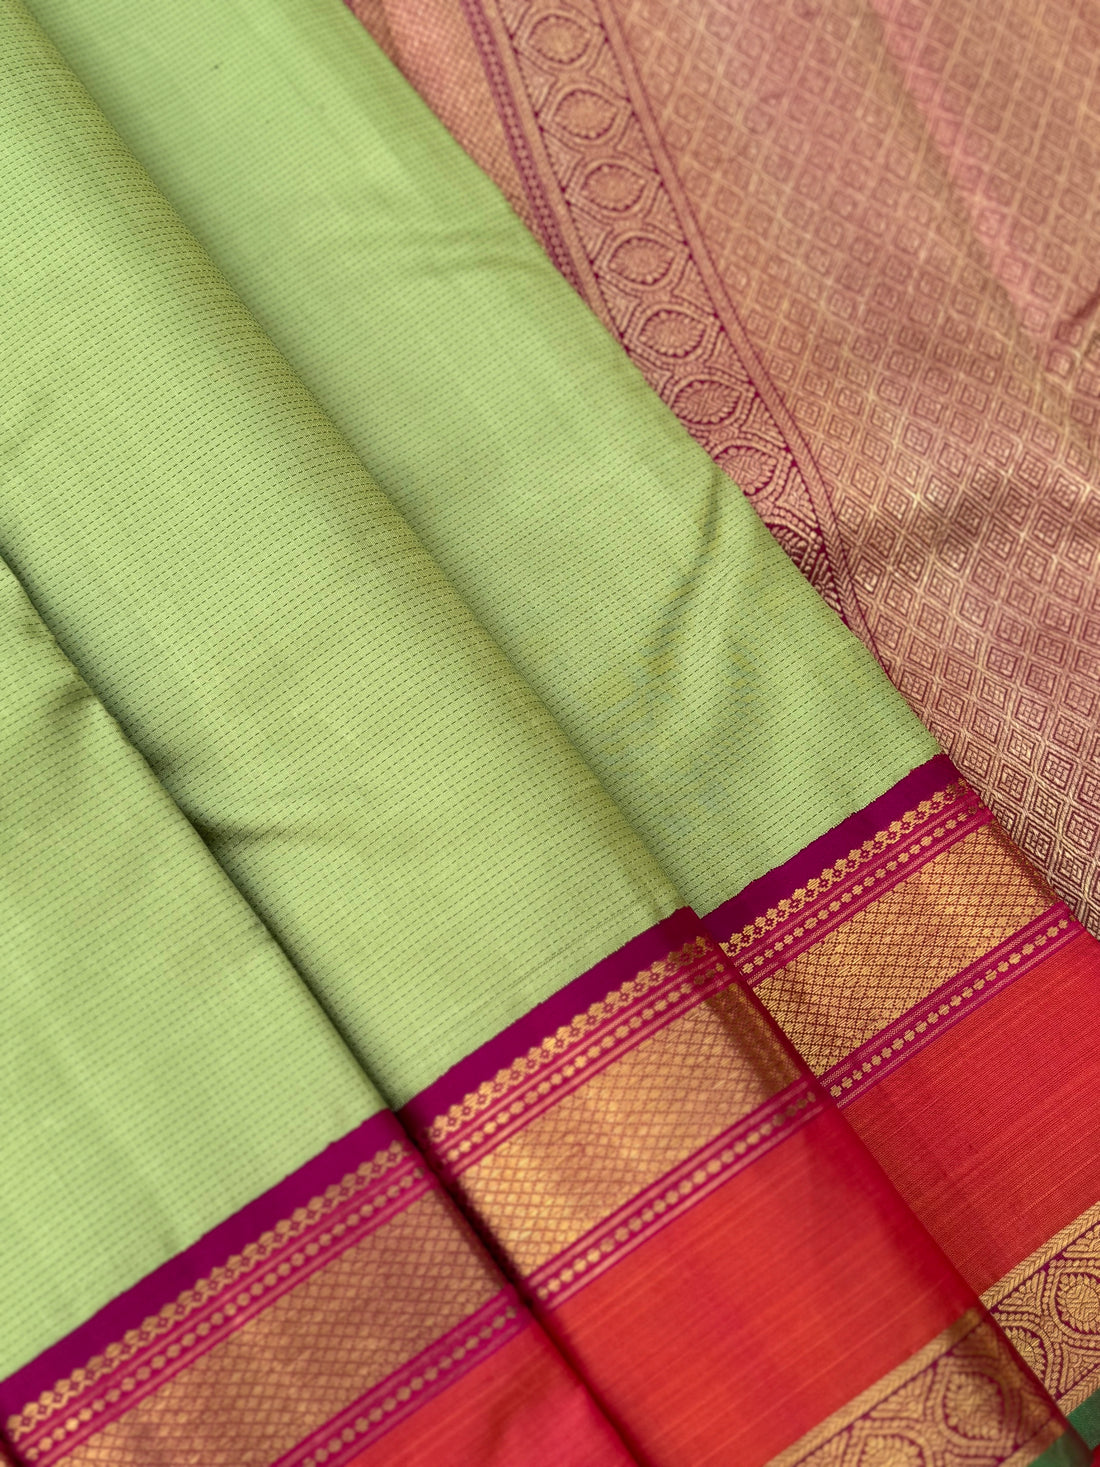 A granduer elaichi/cardamom green with peachish pink thread muthu seer woven korvai zari border kanchivaram silk saree